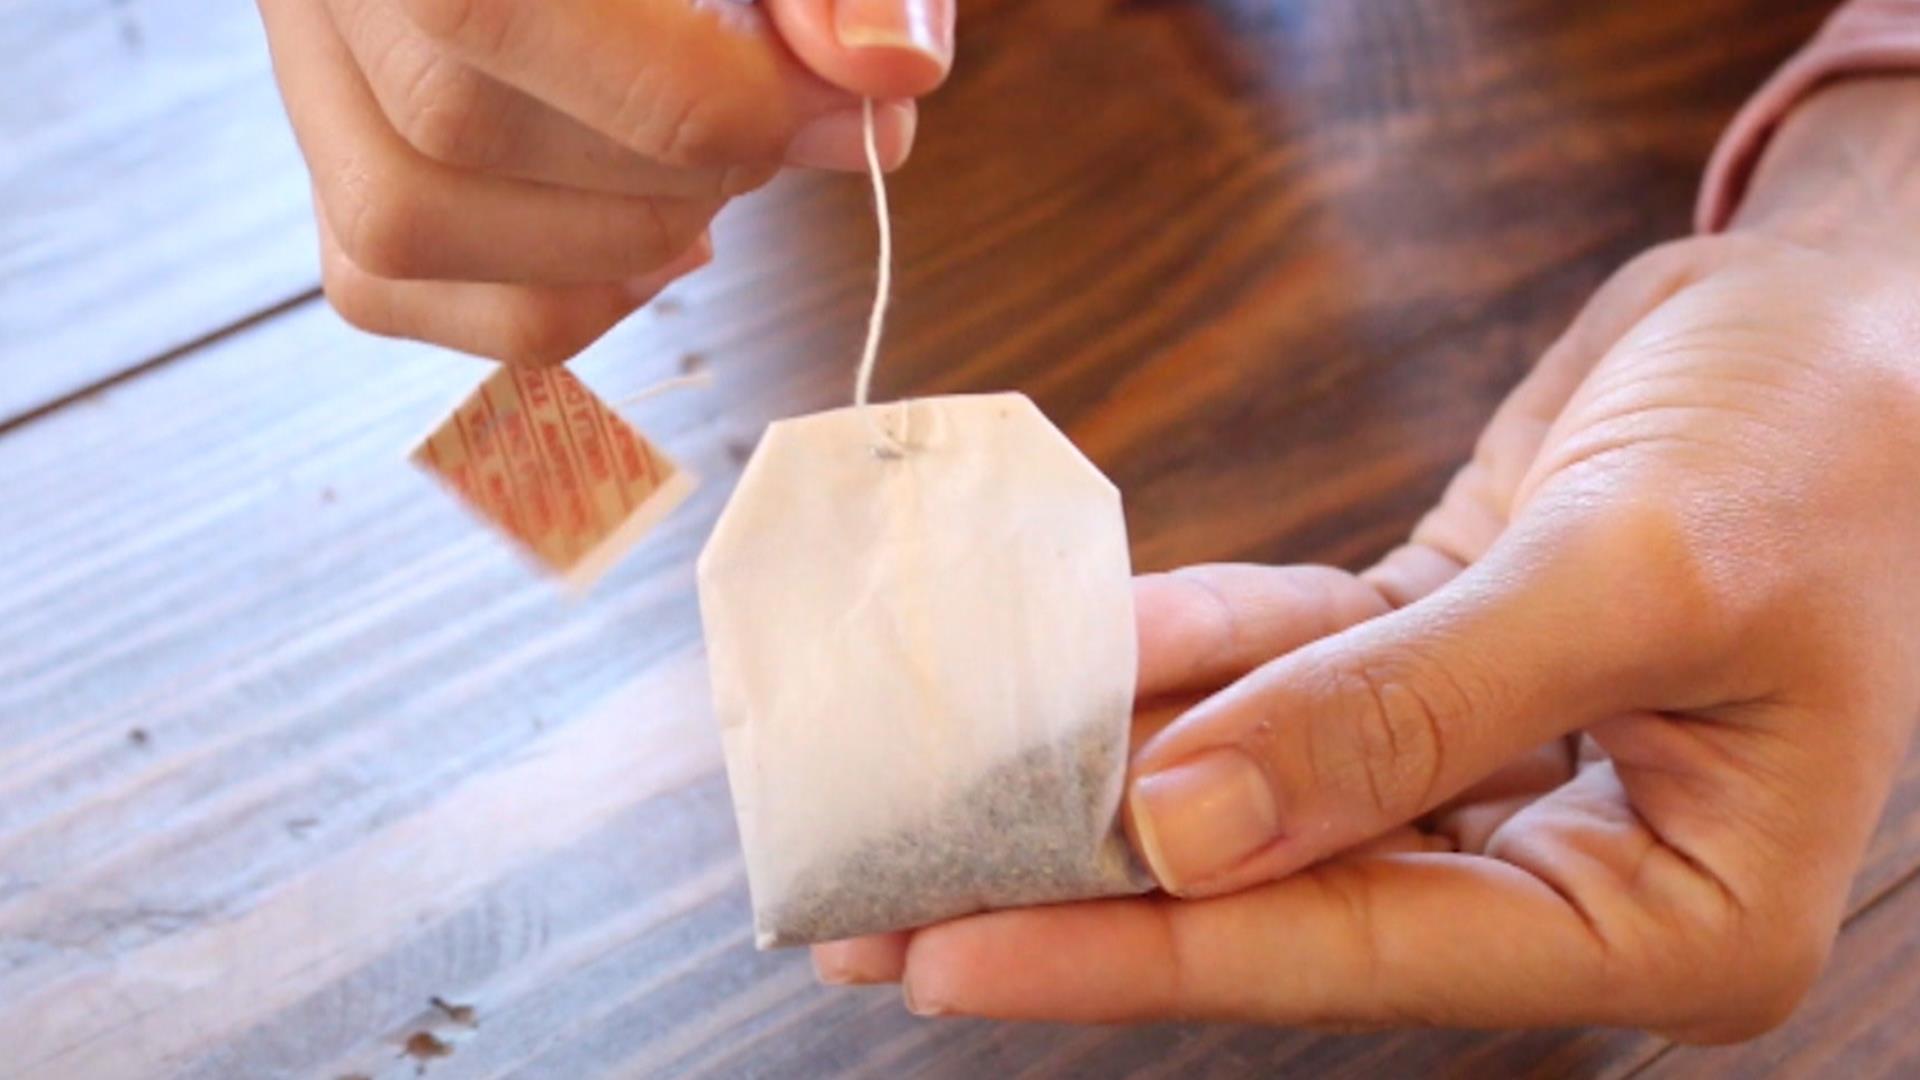 Here's how a tea bag will fix a broken nail